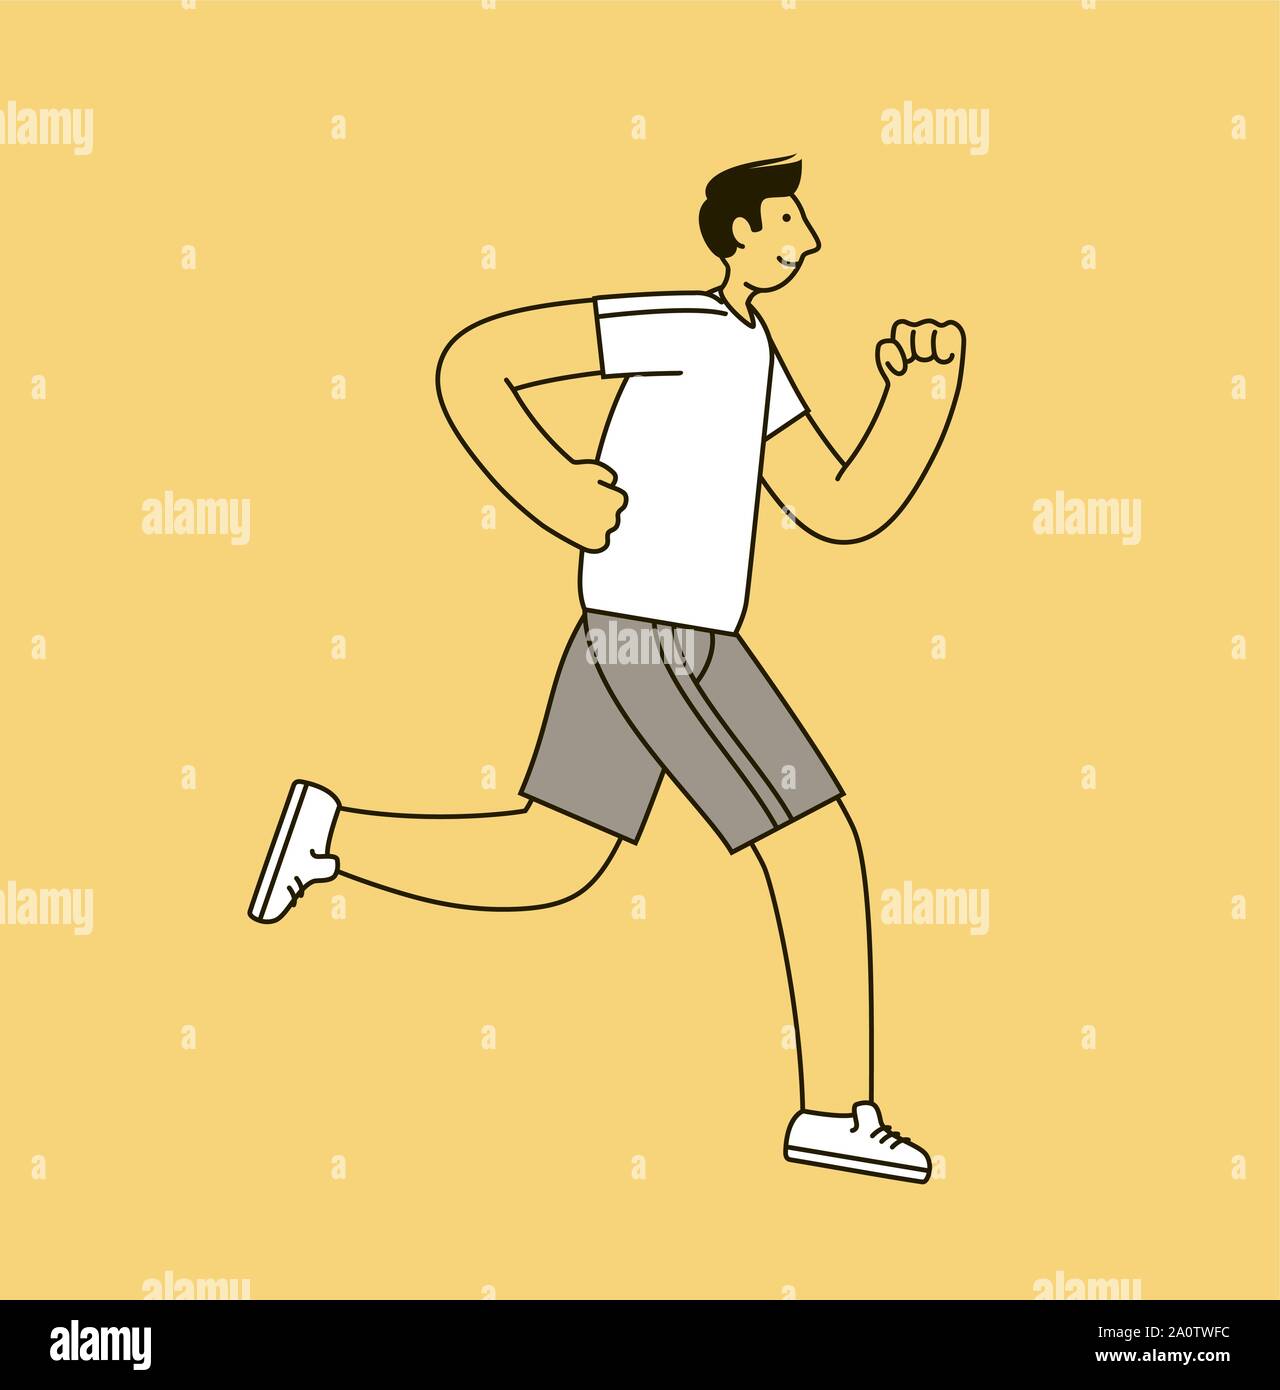 Jogging man. Sport, fitness concept. Linear style vector illustration Stock Vector